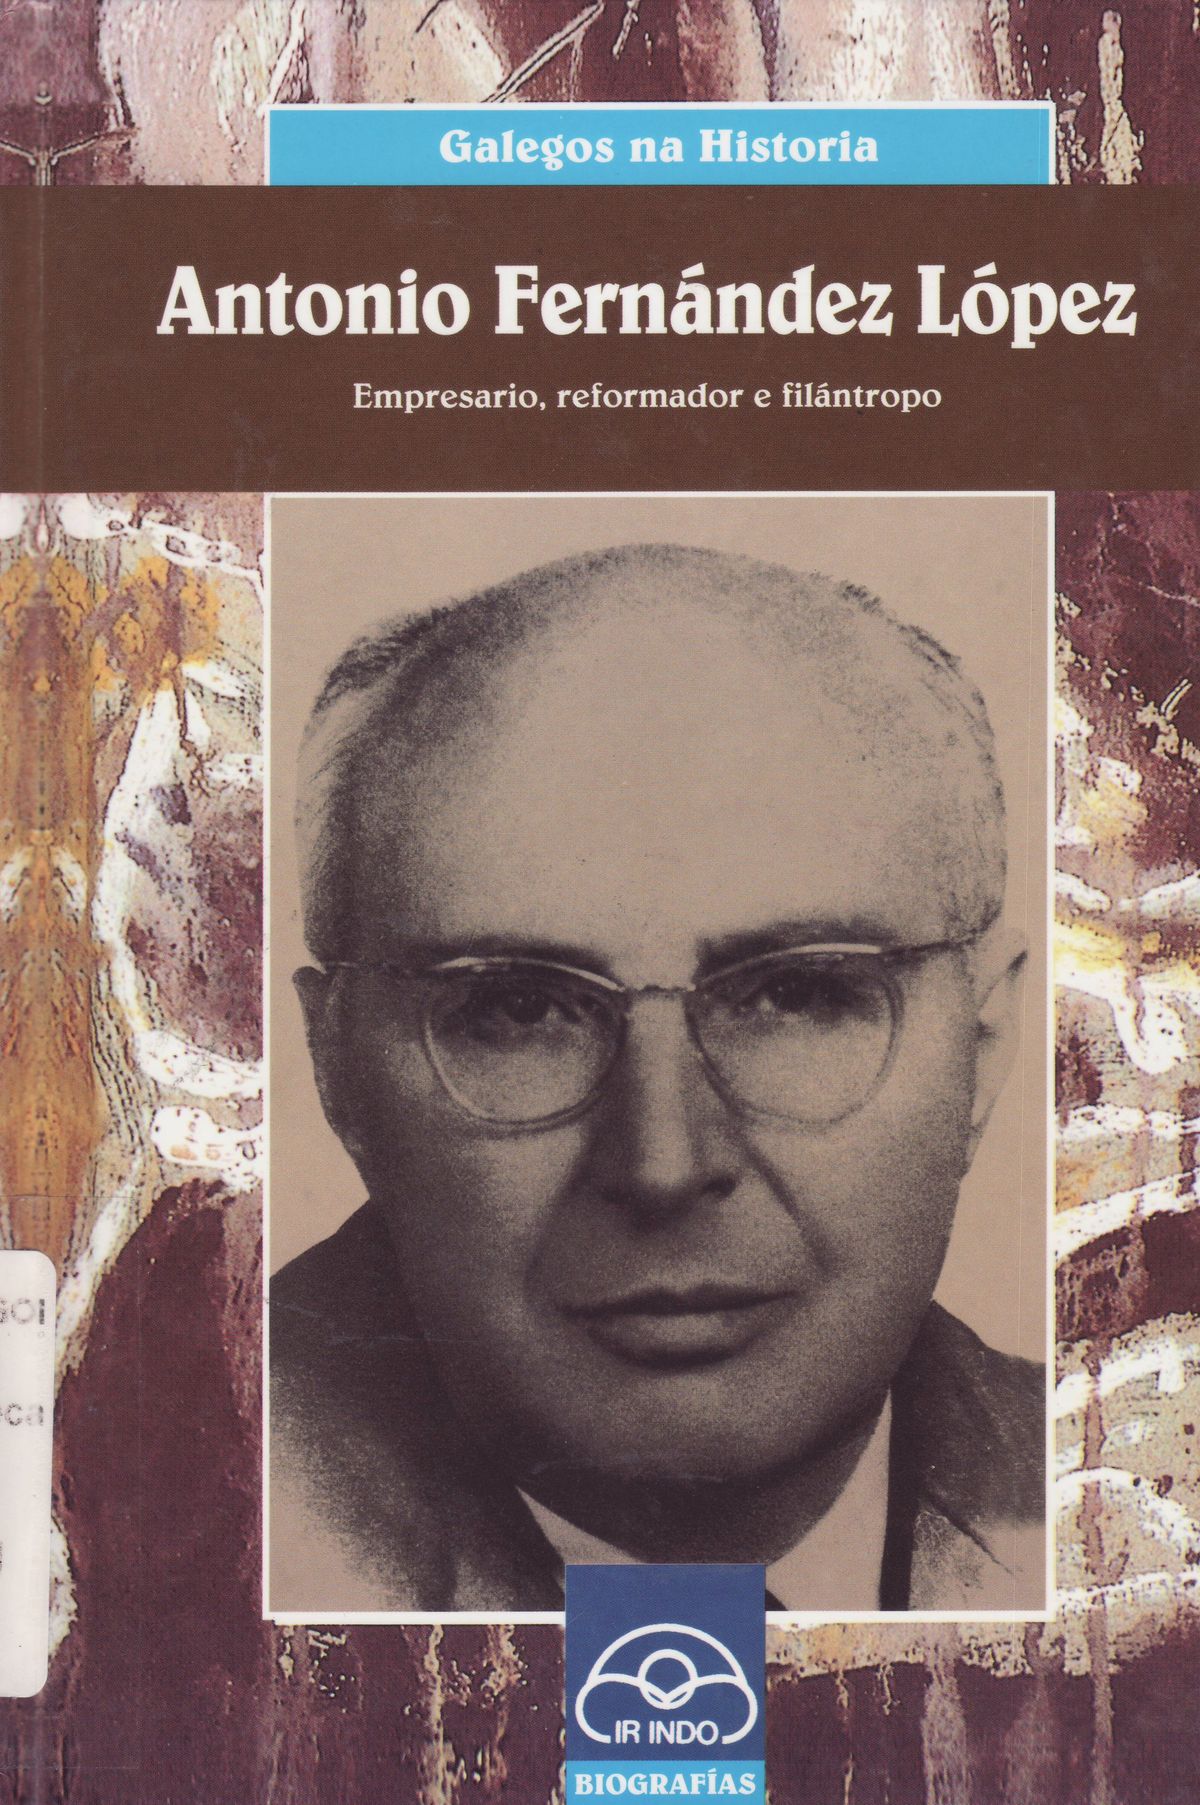 Antonio Fernández López